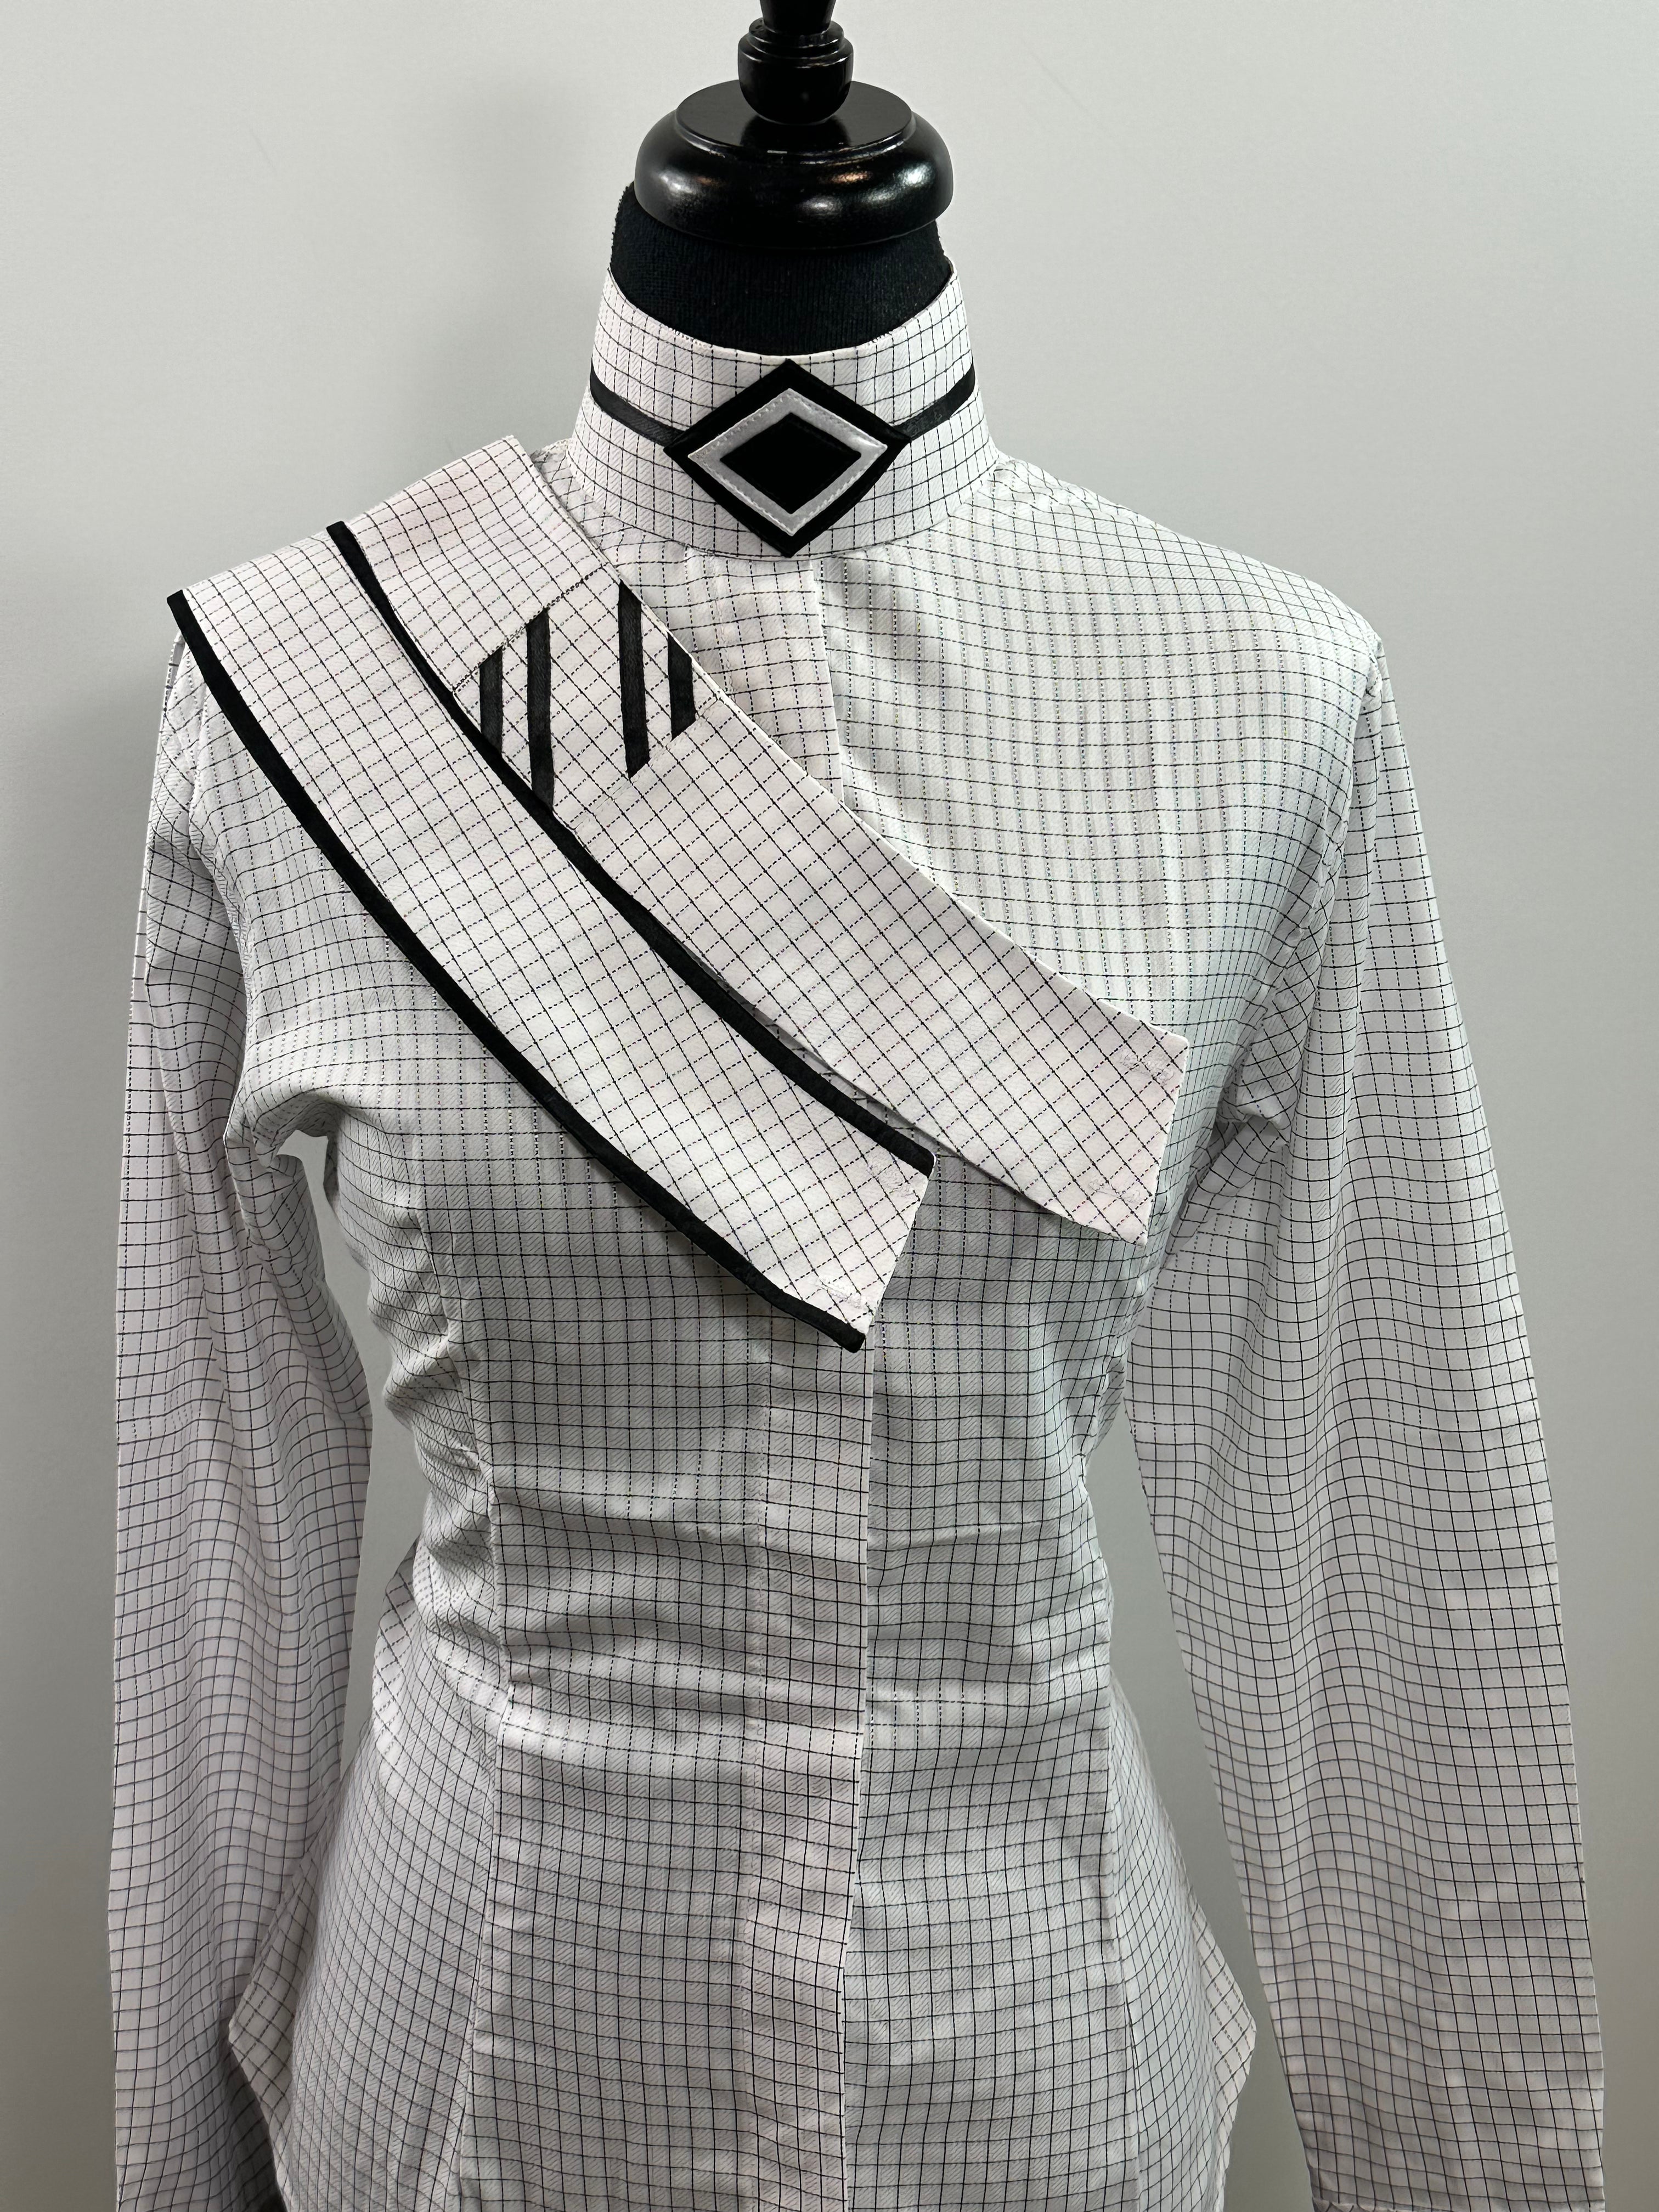 English Show Shirt White and Black Plaid Fabric Code U53